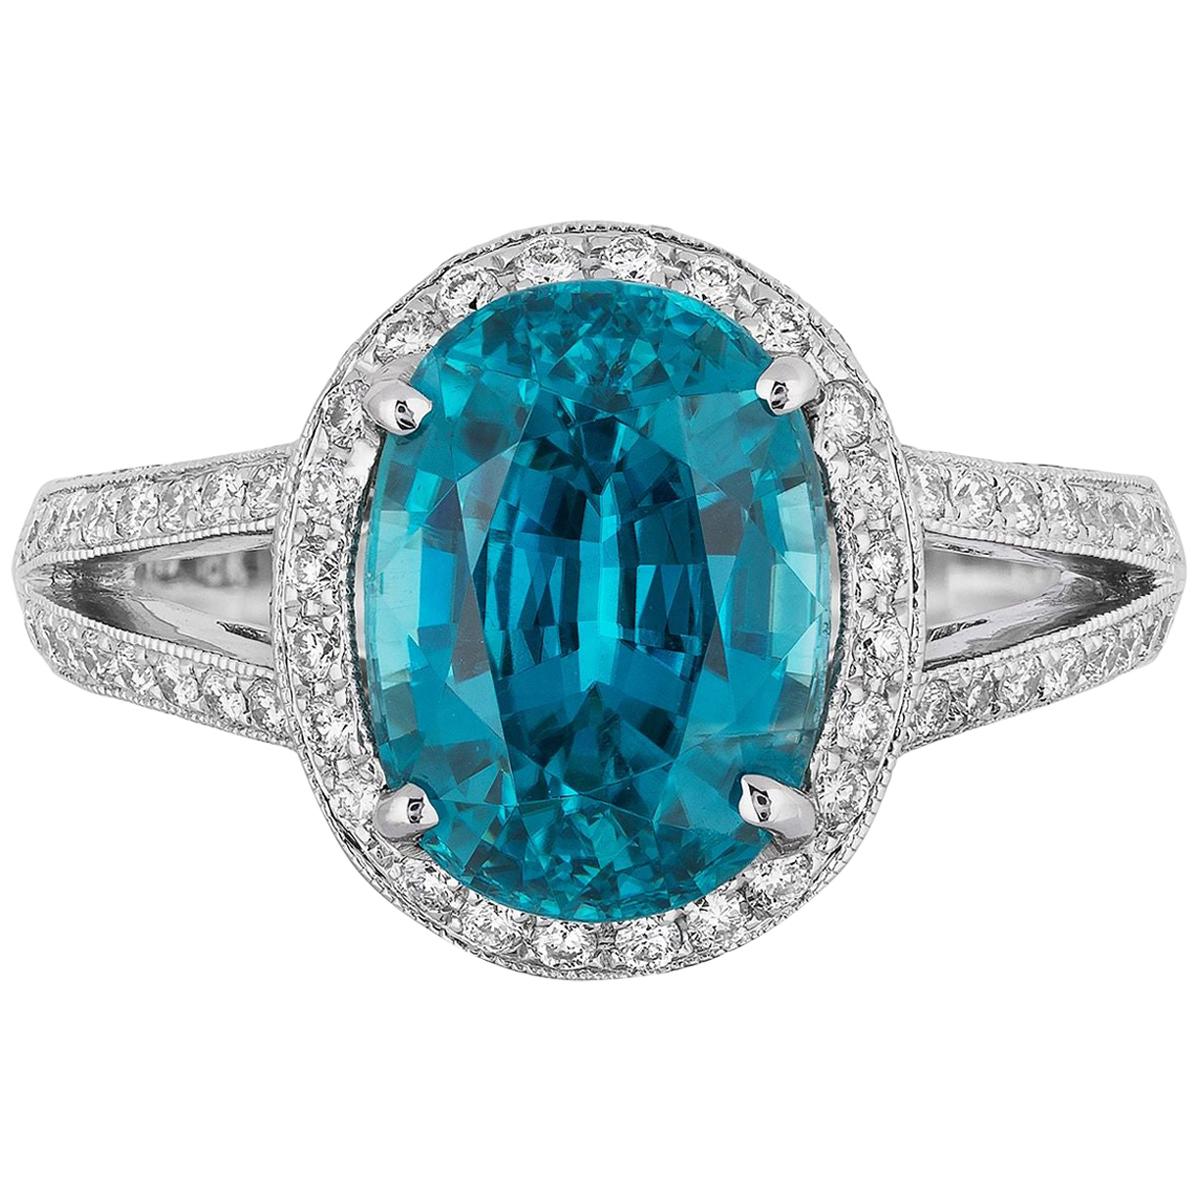 6.07 Carat Blue Zircon Diamond Cocktail Ring